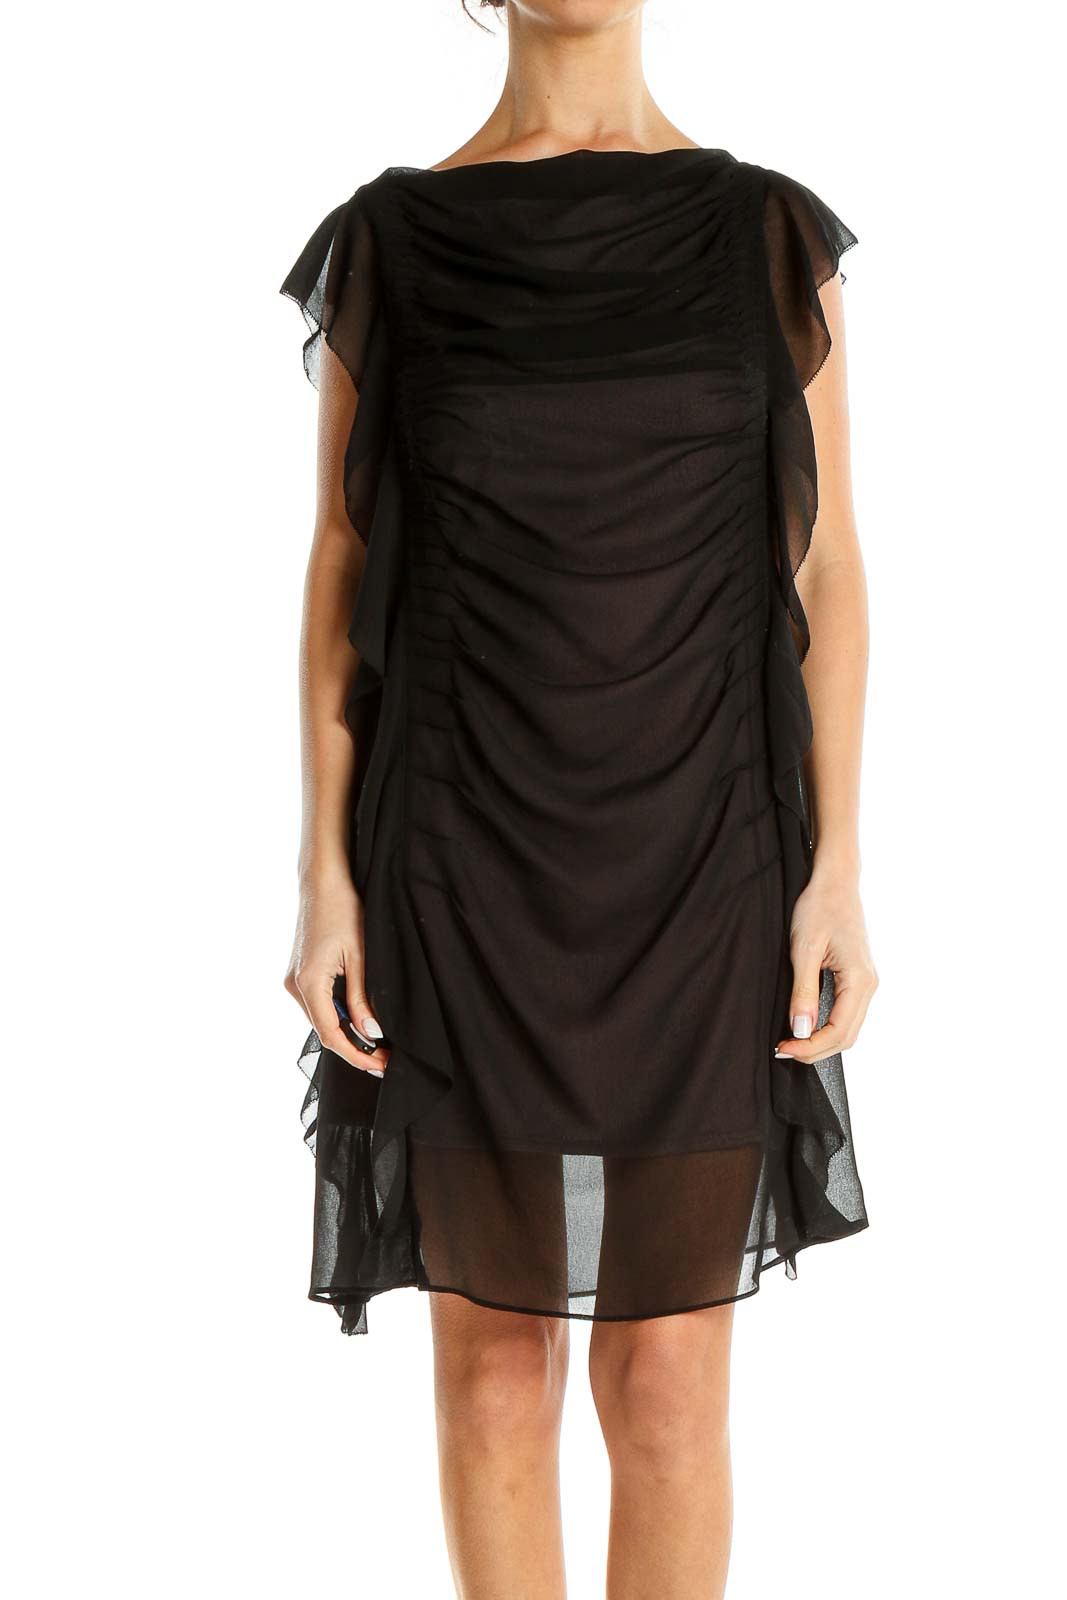 Black Sheer Ruched Cocktail Dress Front